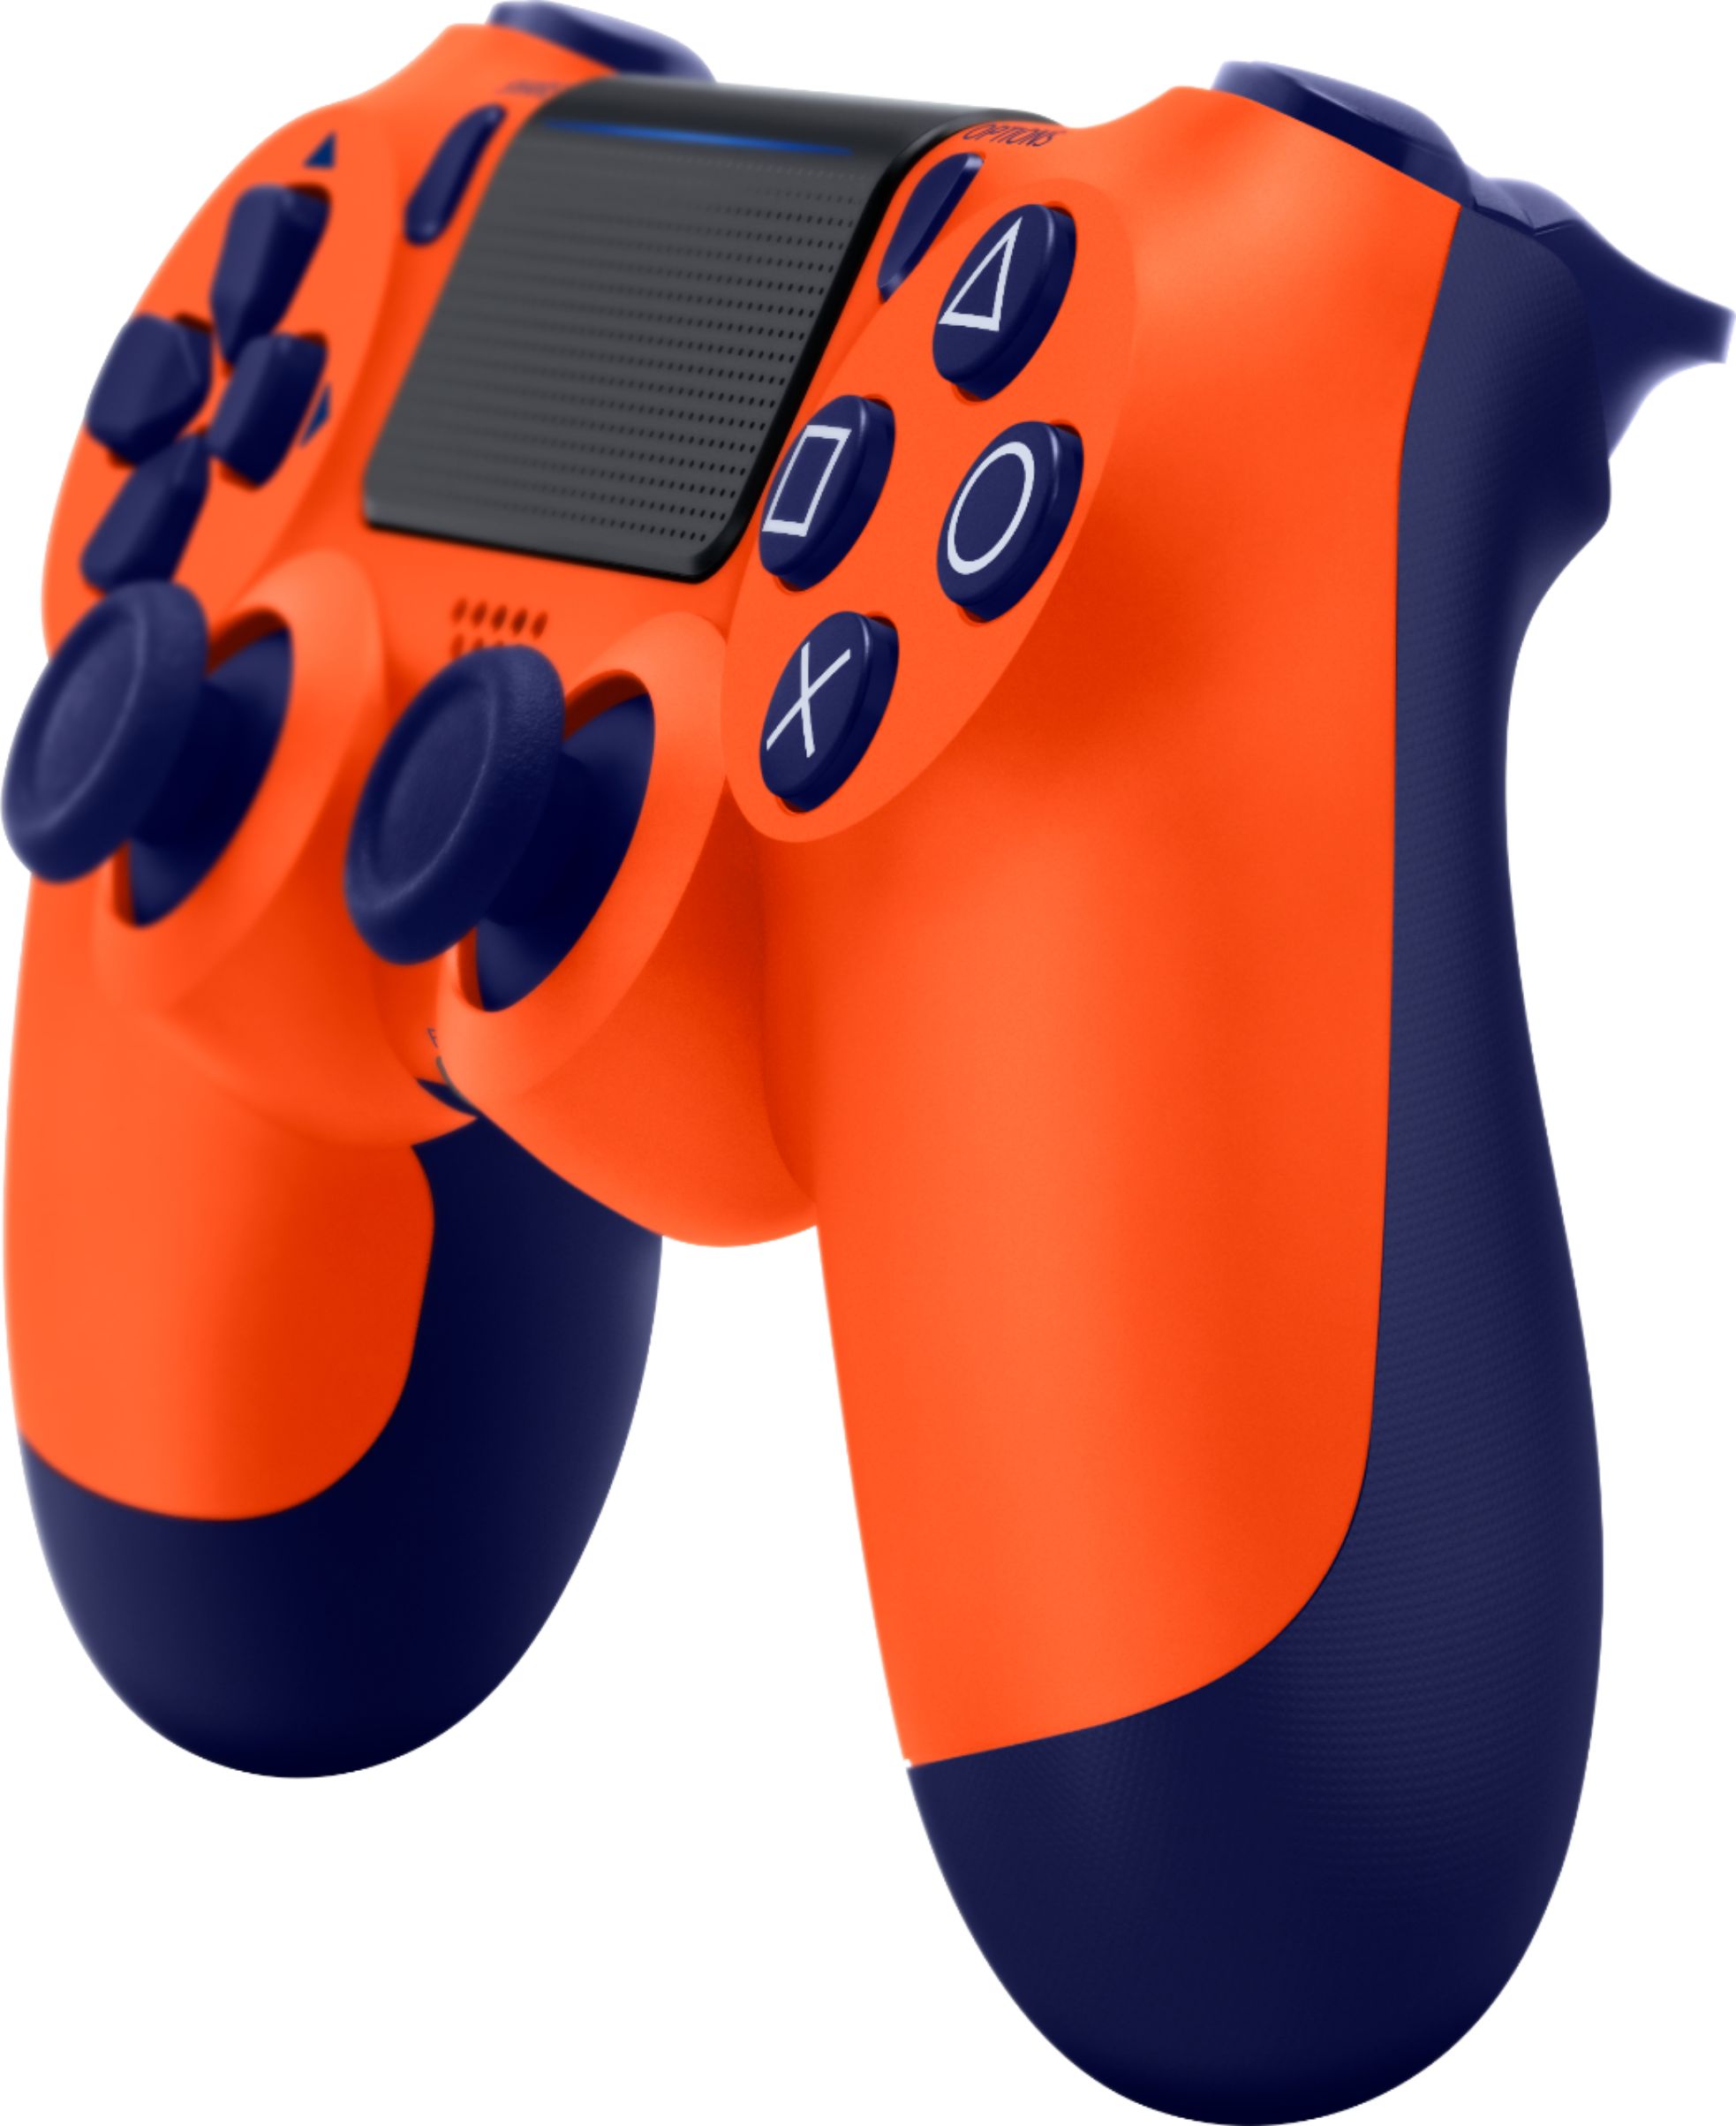 black and orange ps4 controller